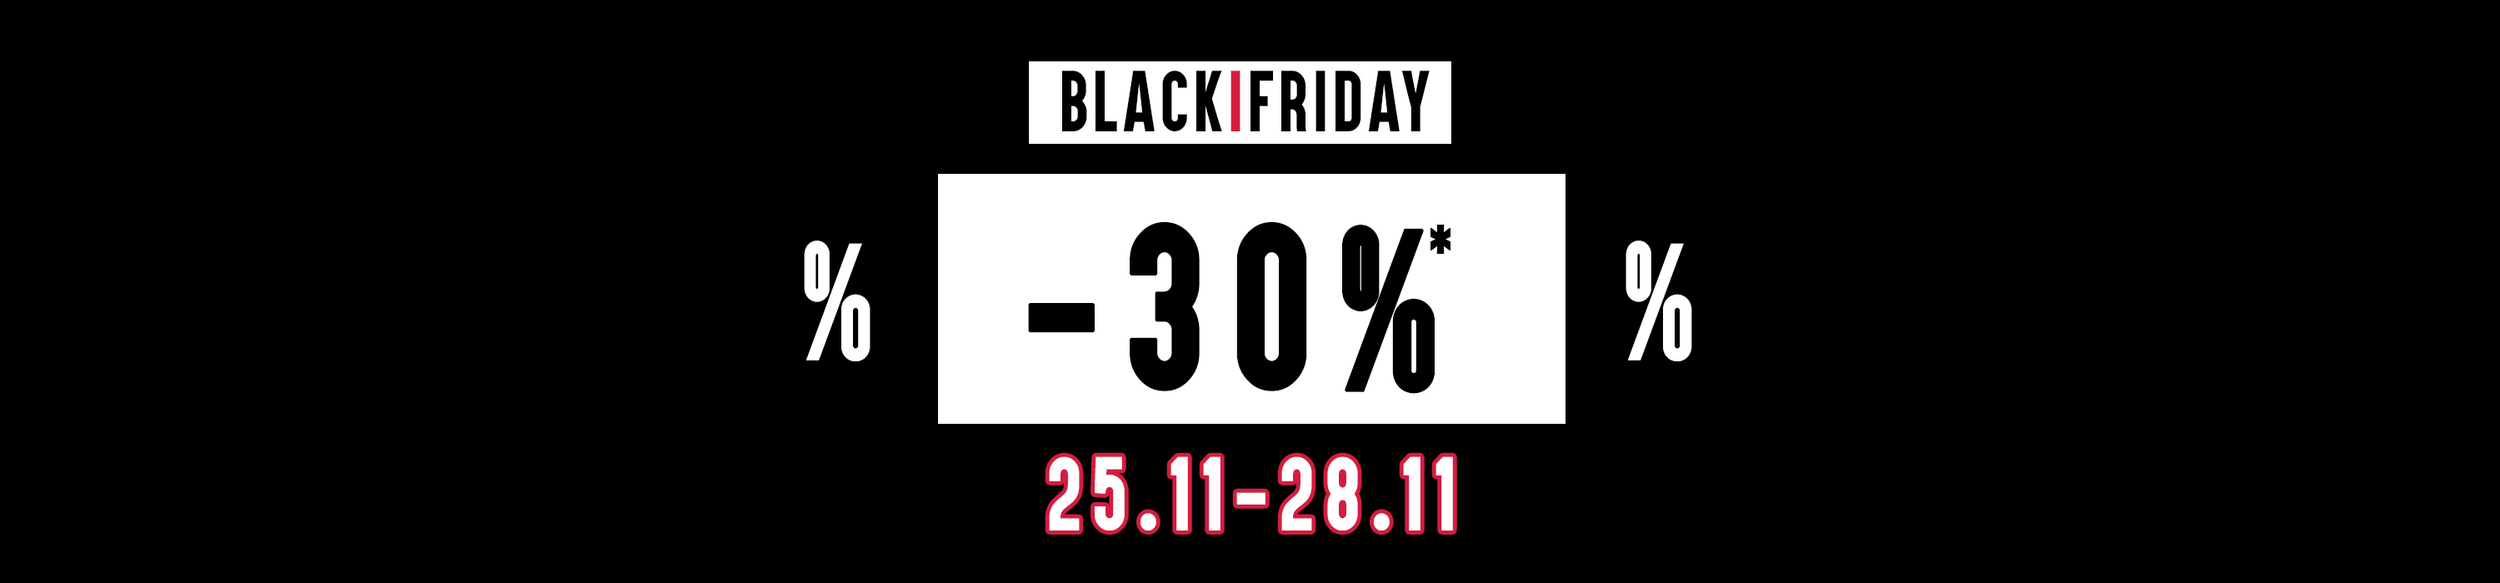 Main Black Friday Deal